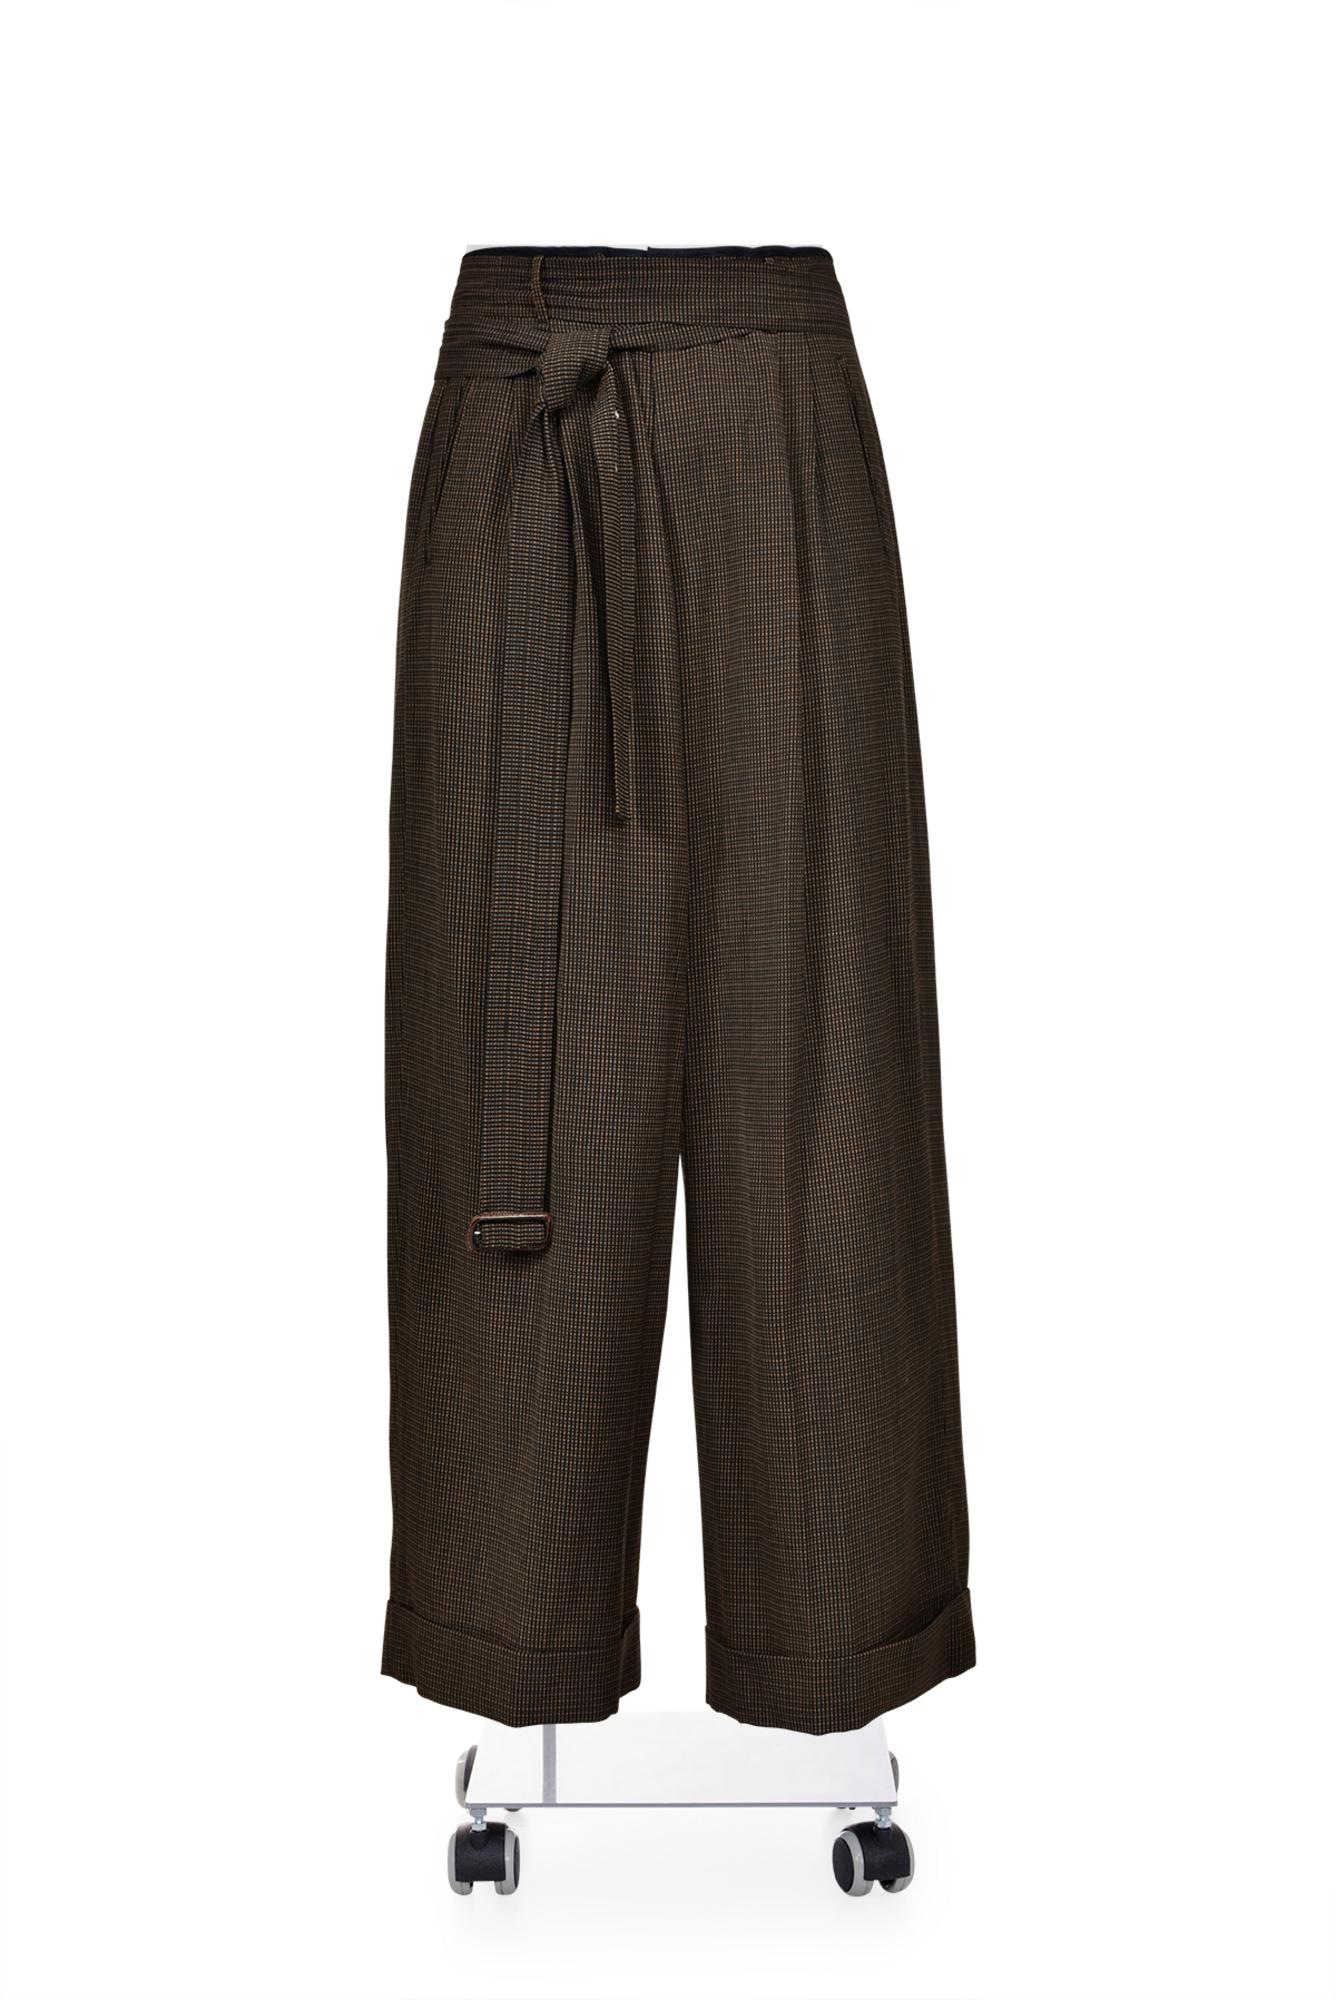 JEAN PAUL GAULTIER High waisted printed trousers DESCRIPTION: High waisted...